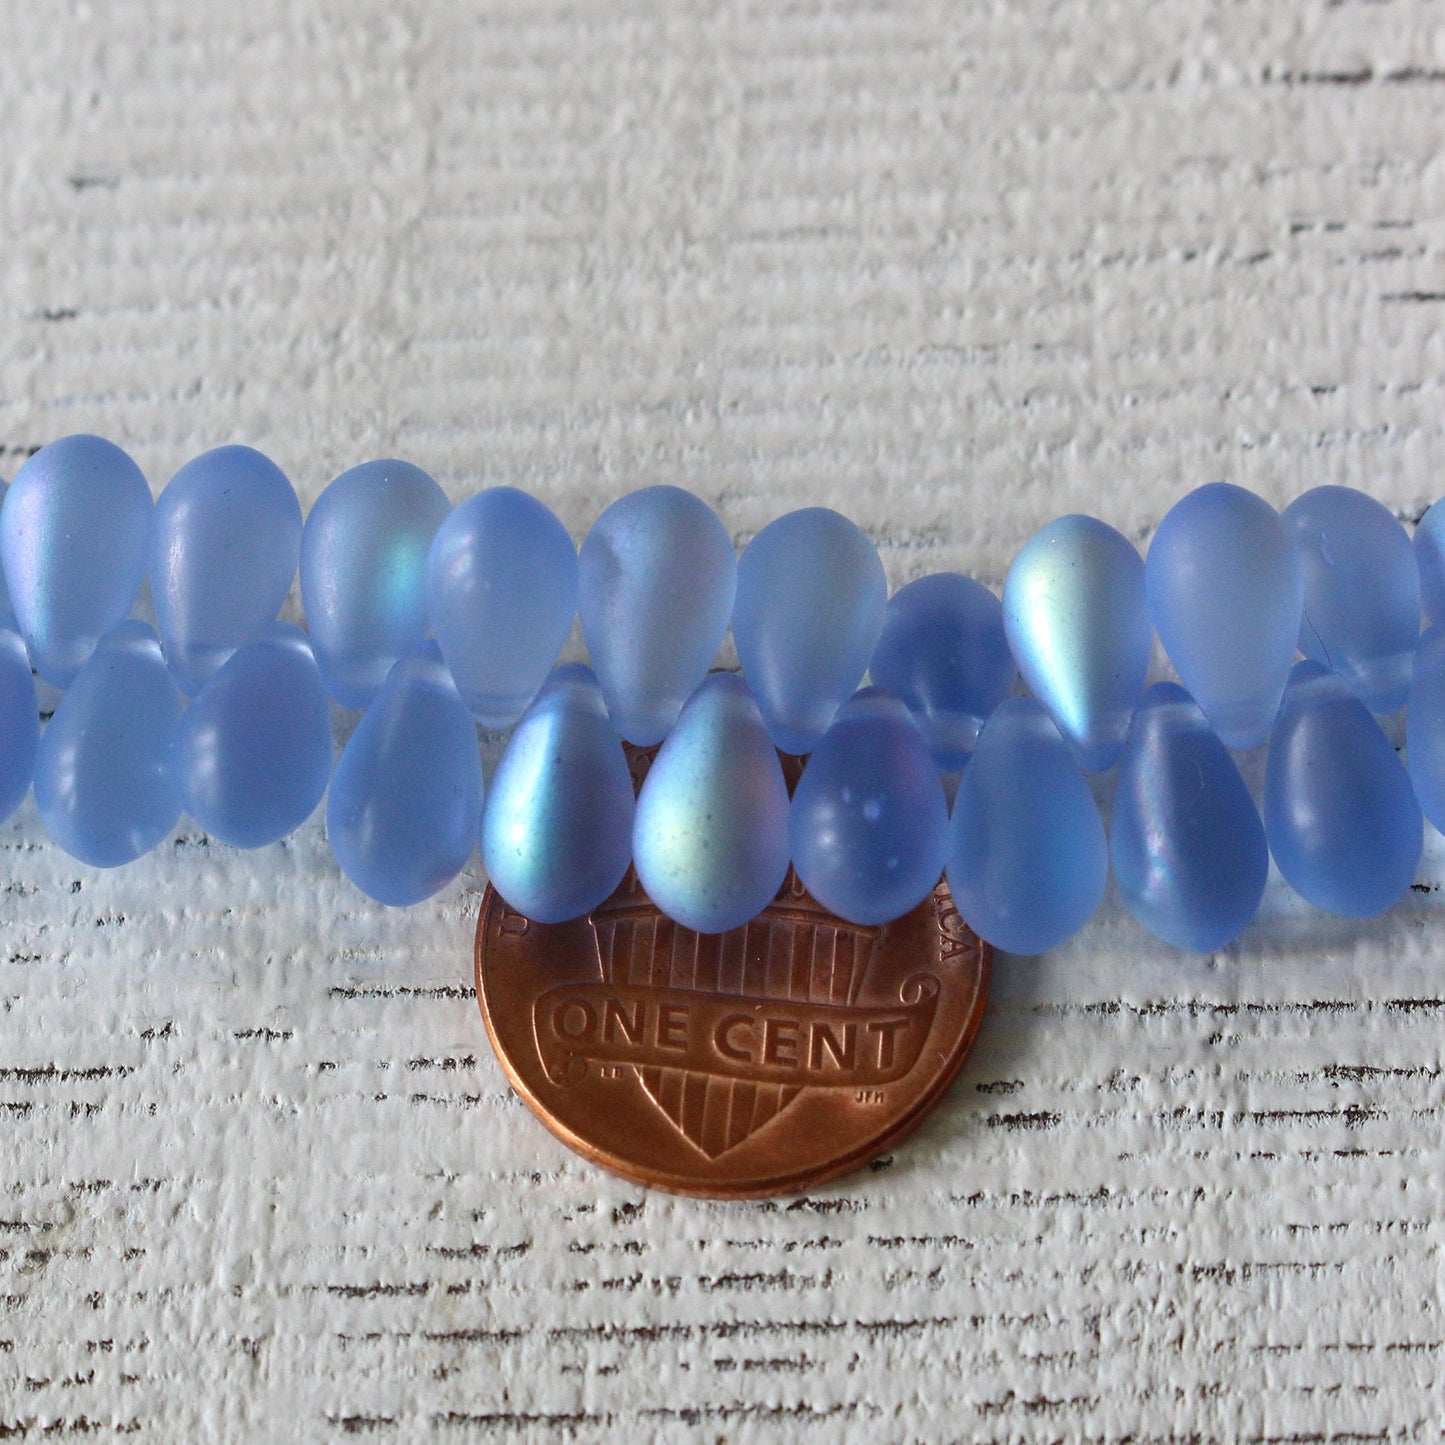 6x9mm Glass Teardrop Beads - Aqua Blue with Silver Dust - 50 Beads –  funkyprettybeads